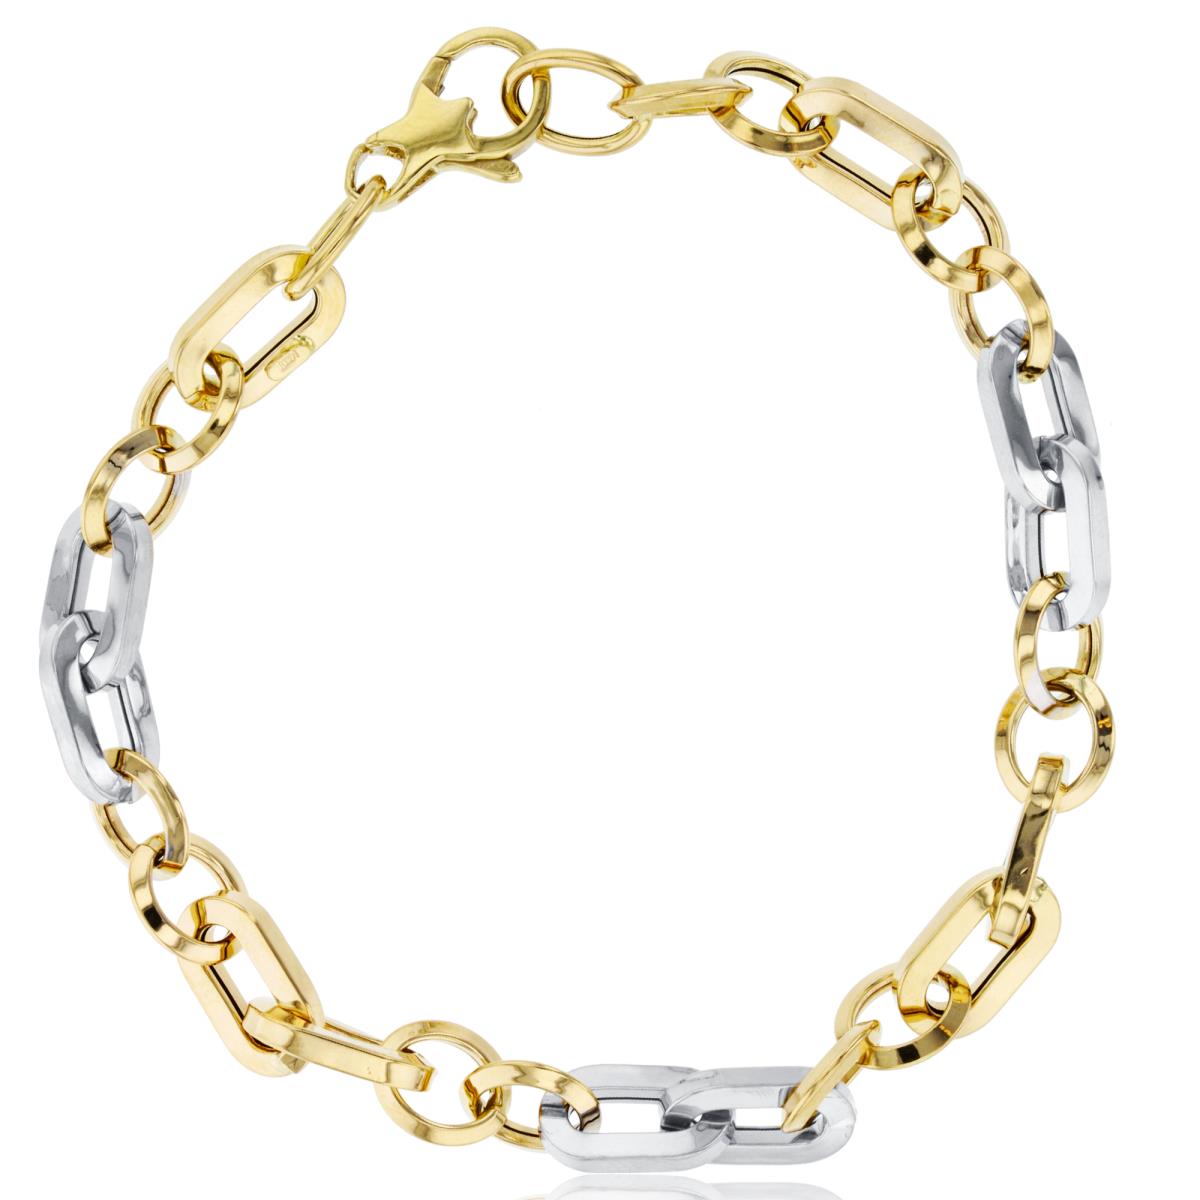 10K Two-Tone Gold Polished Oval & Round Links 8" Bracelet